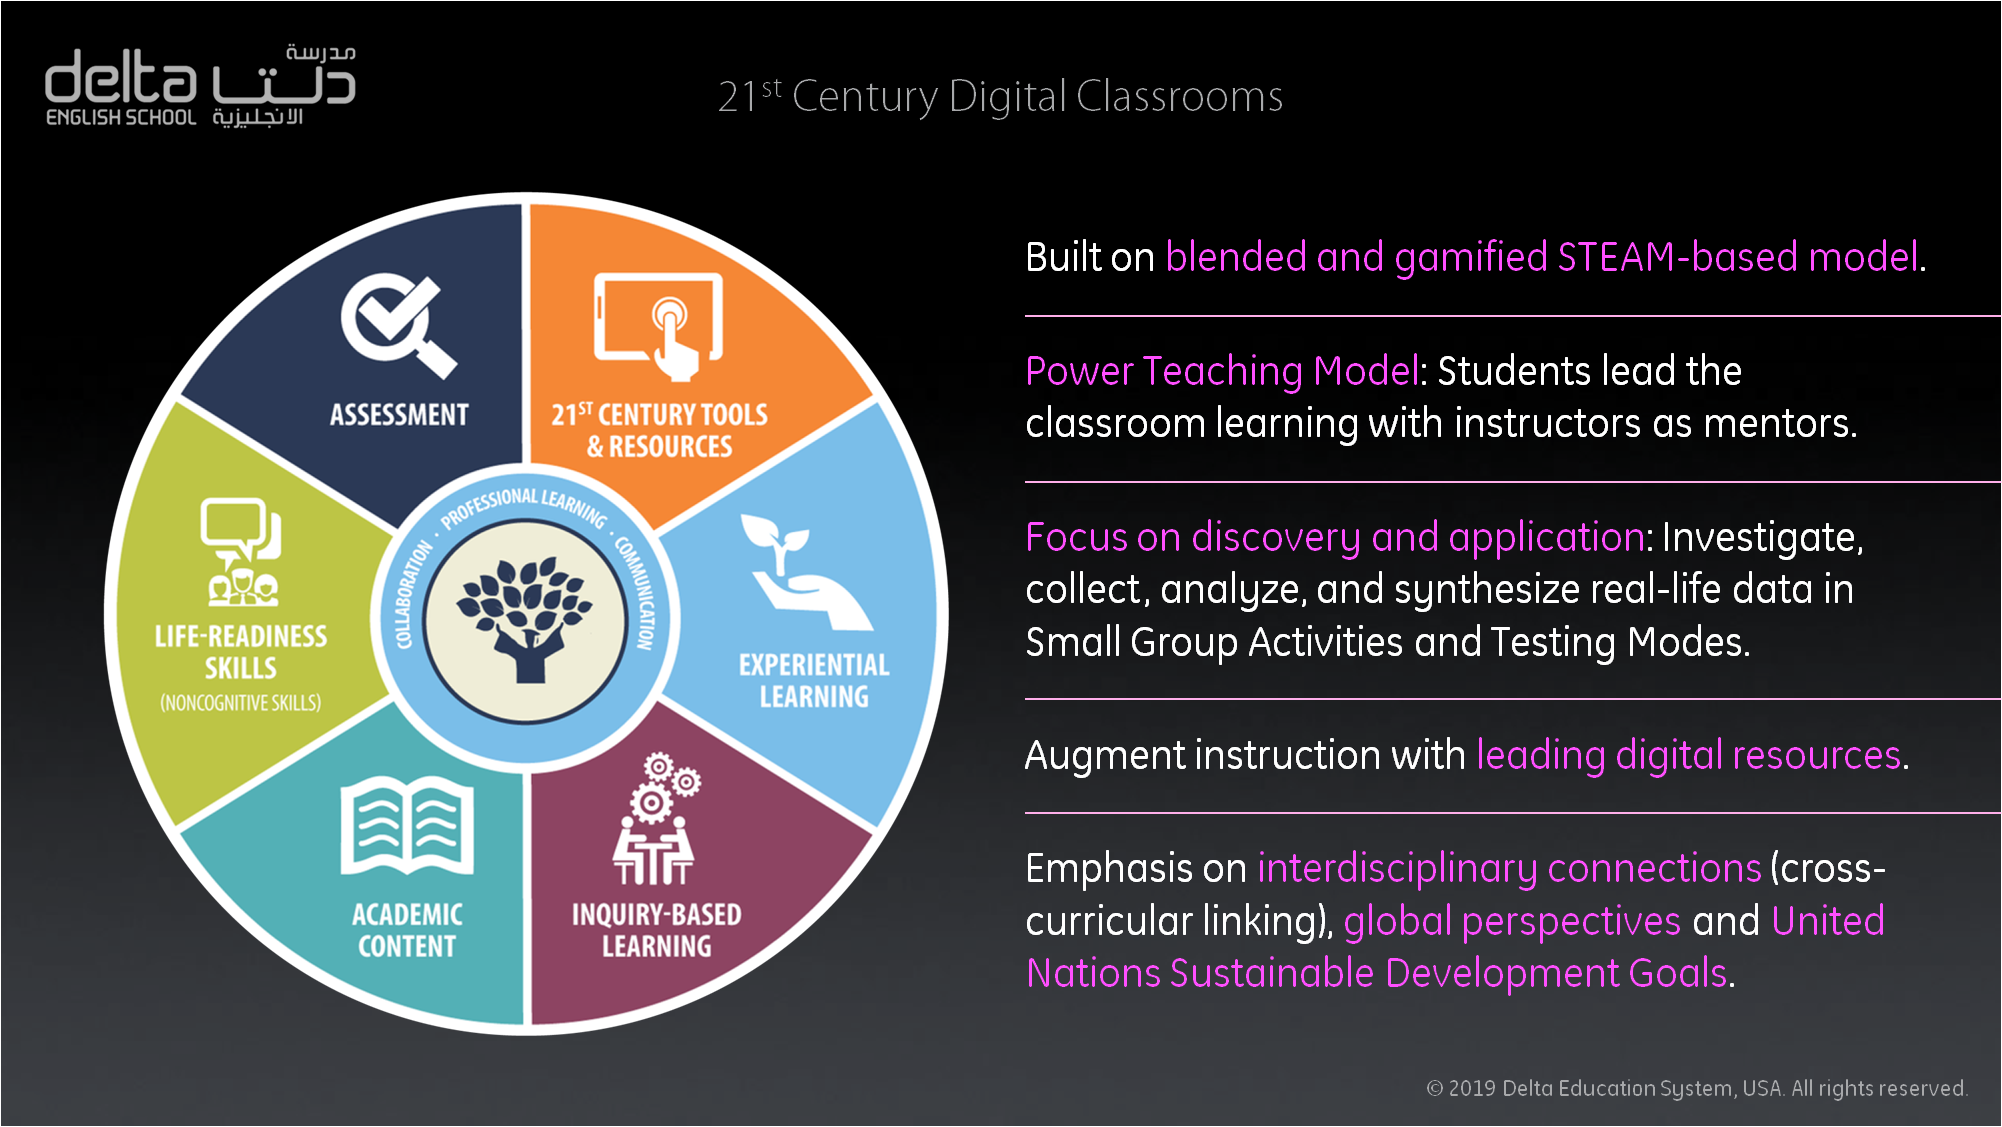 21st Century Digital Classrooms